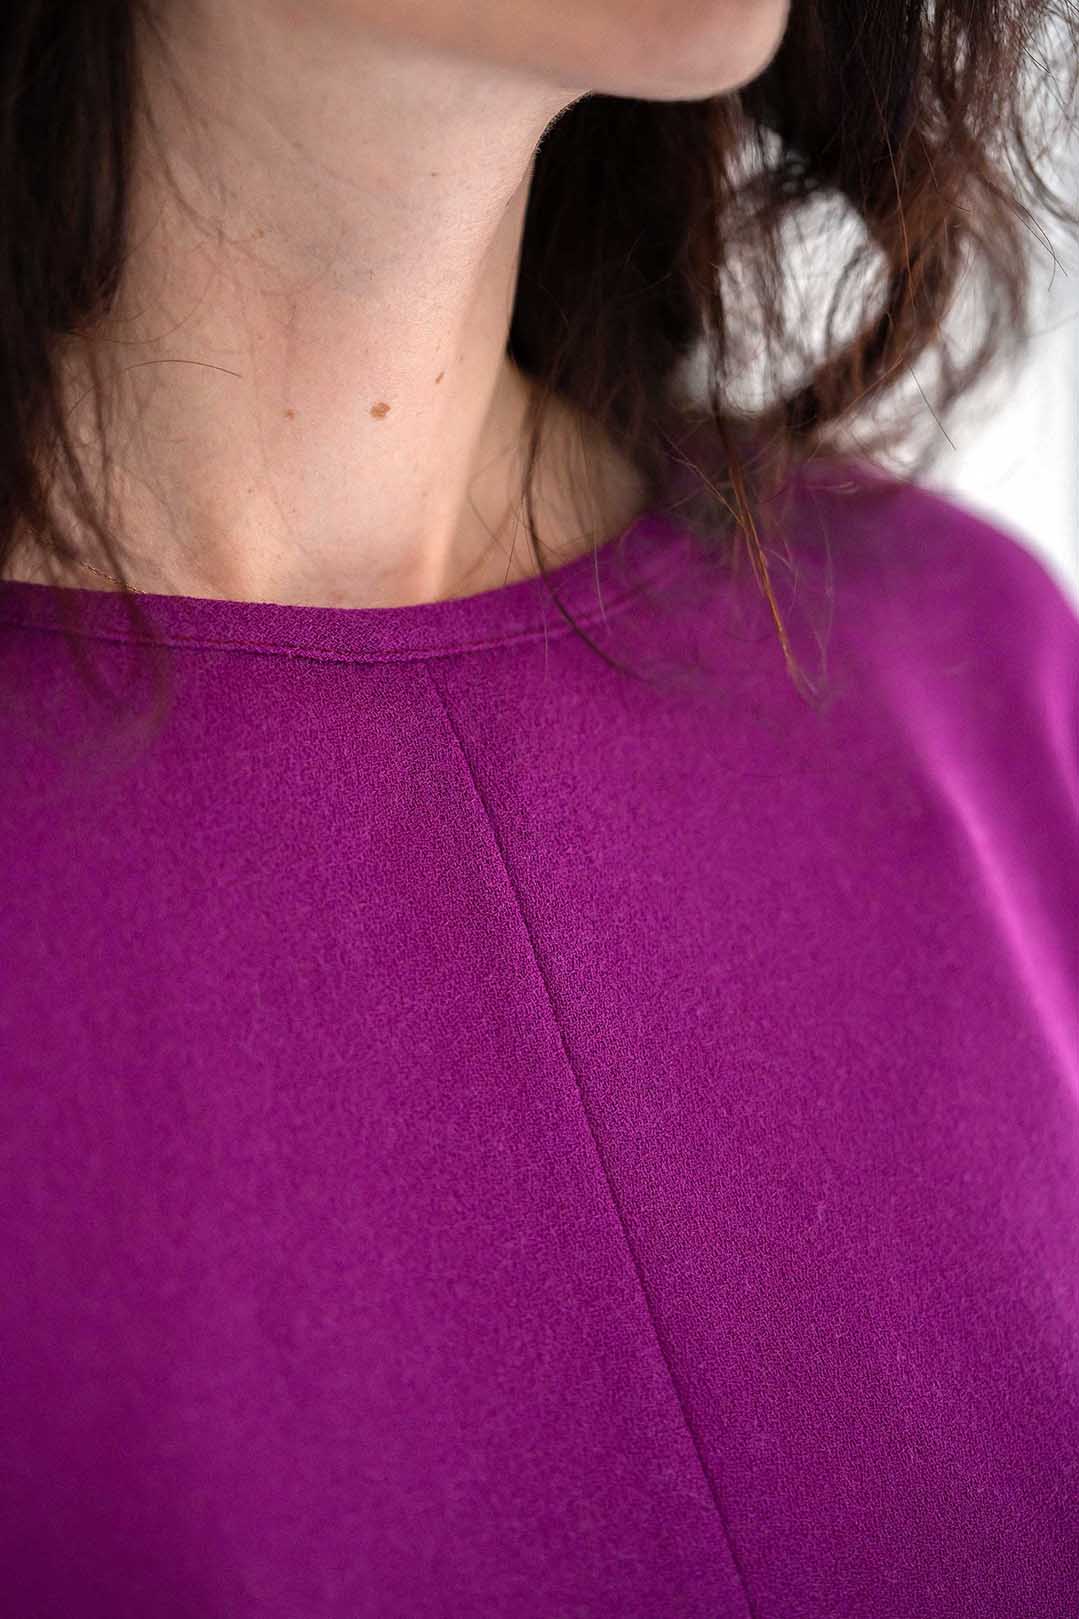 Top violet oversize femme en crêpe de laine Chiara Violet ATODE